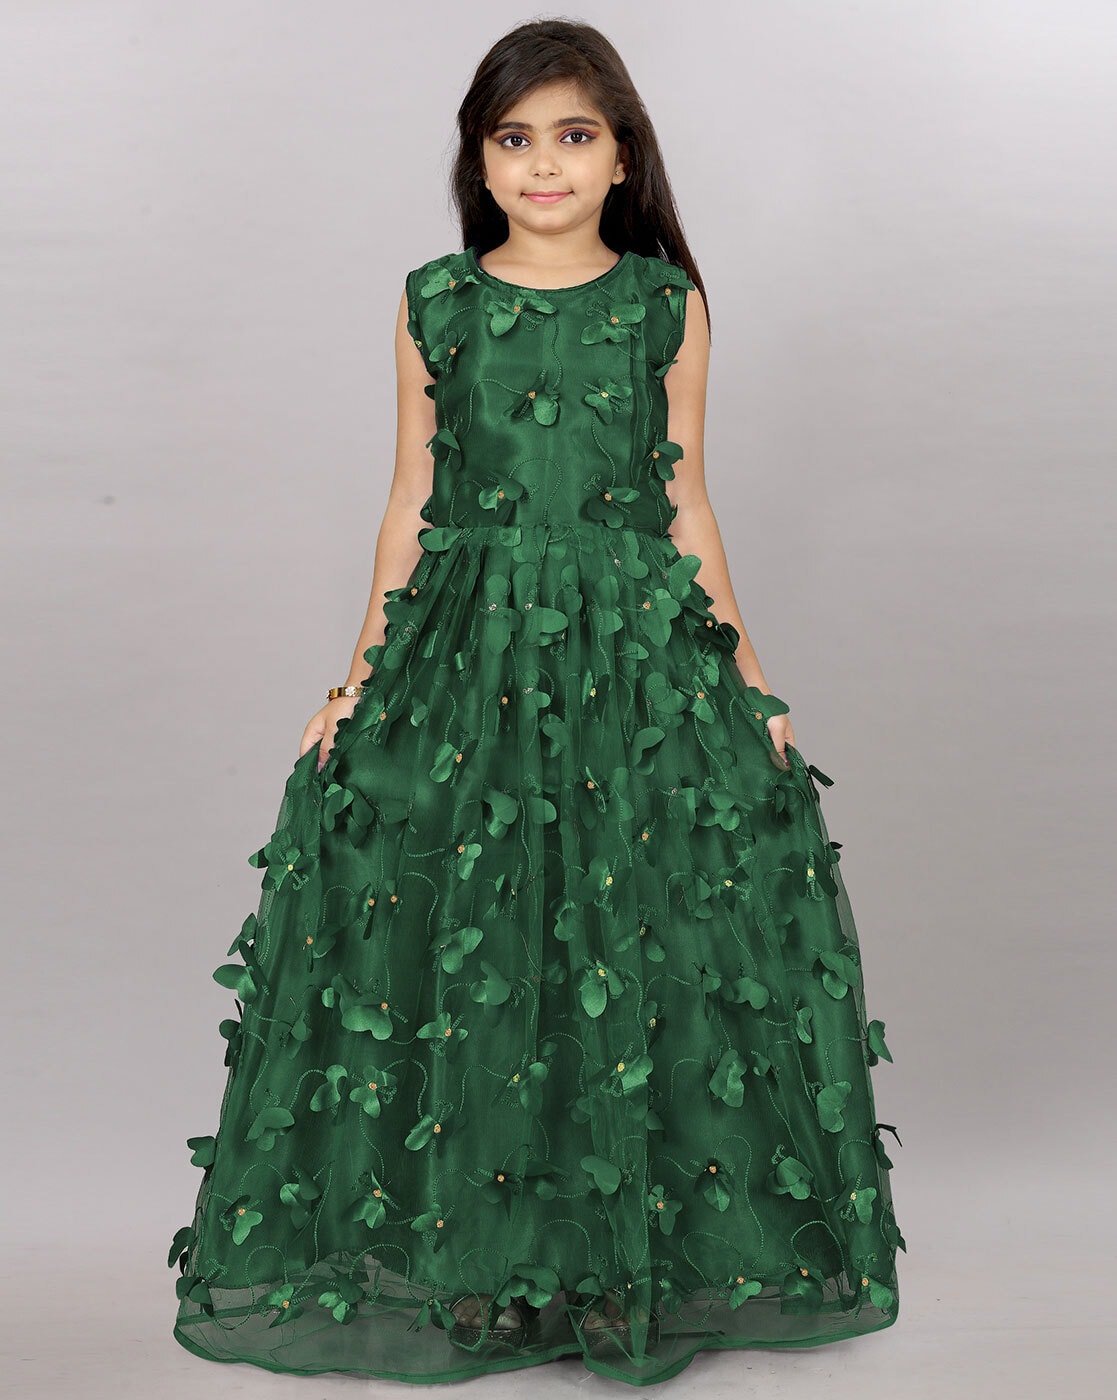 Green Colour Dress For Girl | estudioespositoymiguel.com.ar